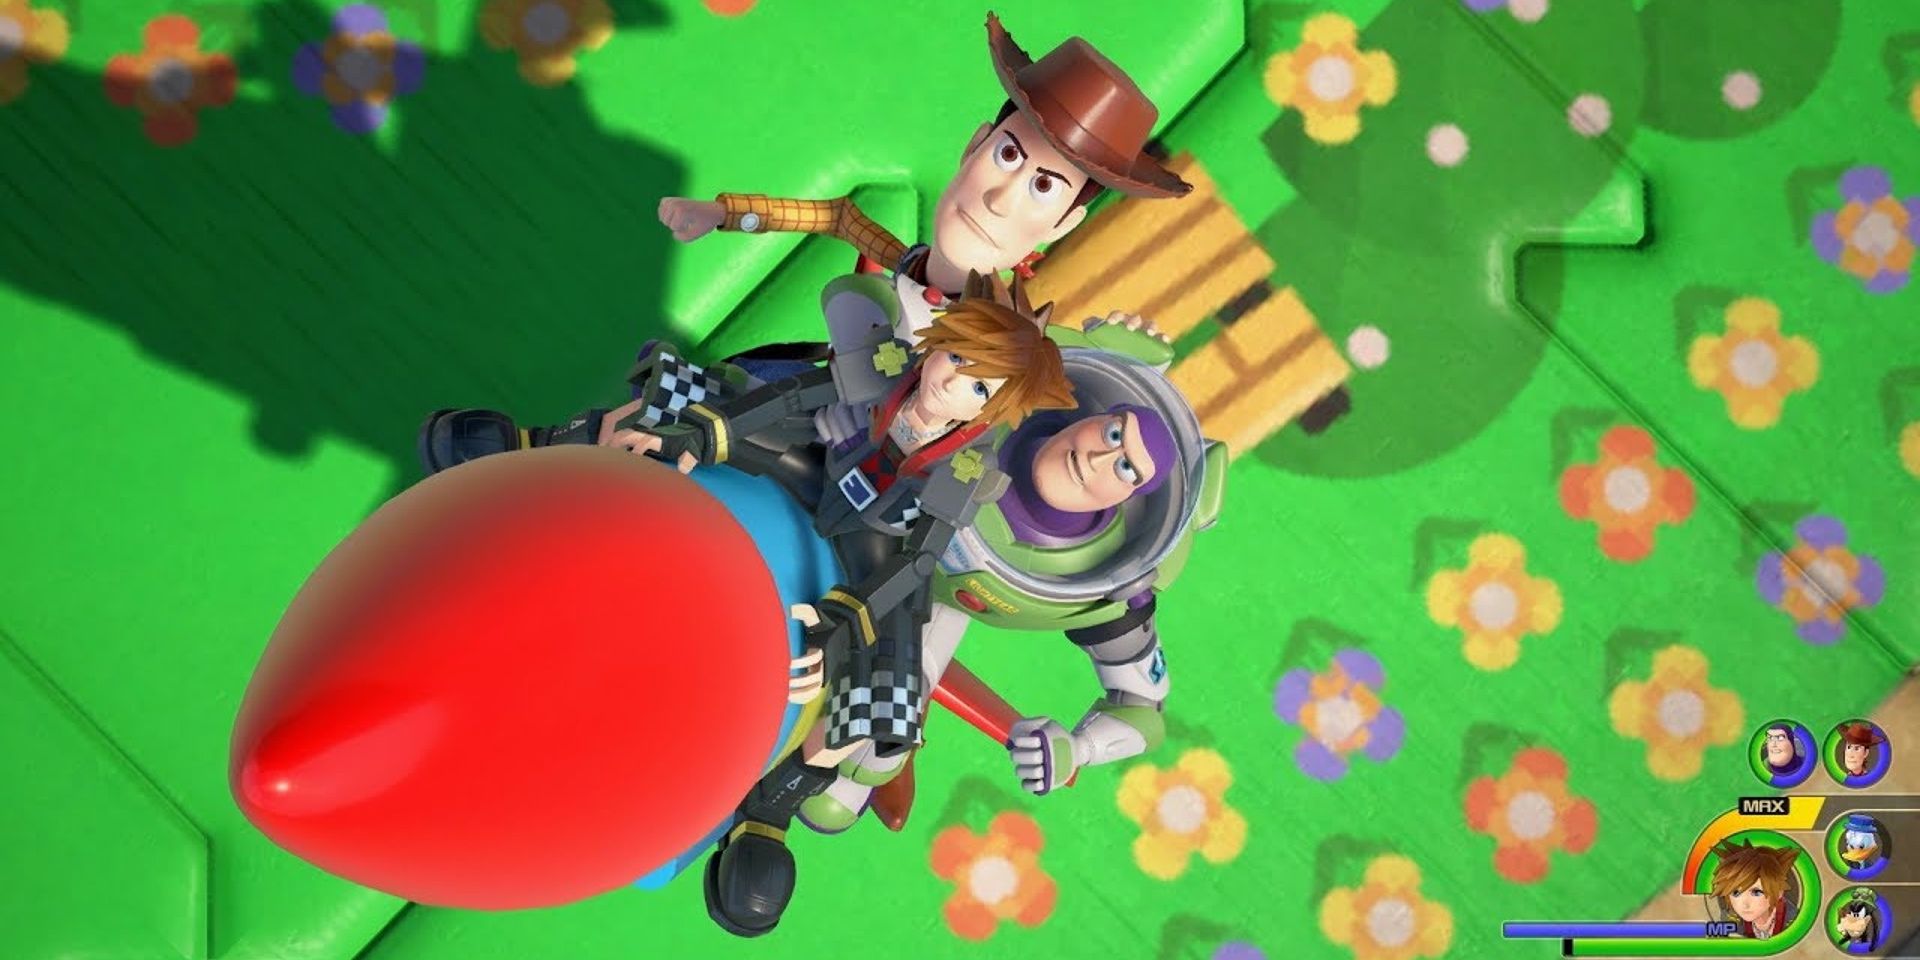 Sora, Woody, and Buzz Lightyear use a rocket attack in Kingdom Hearts III